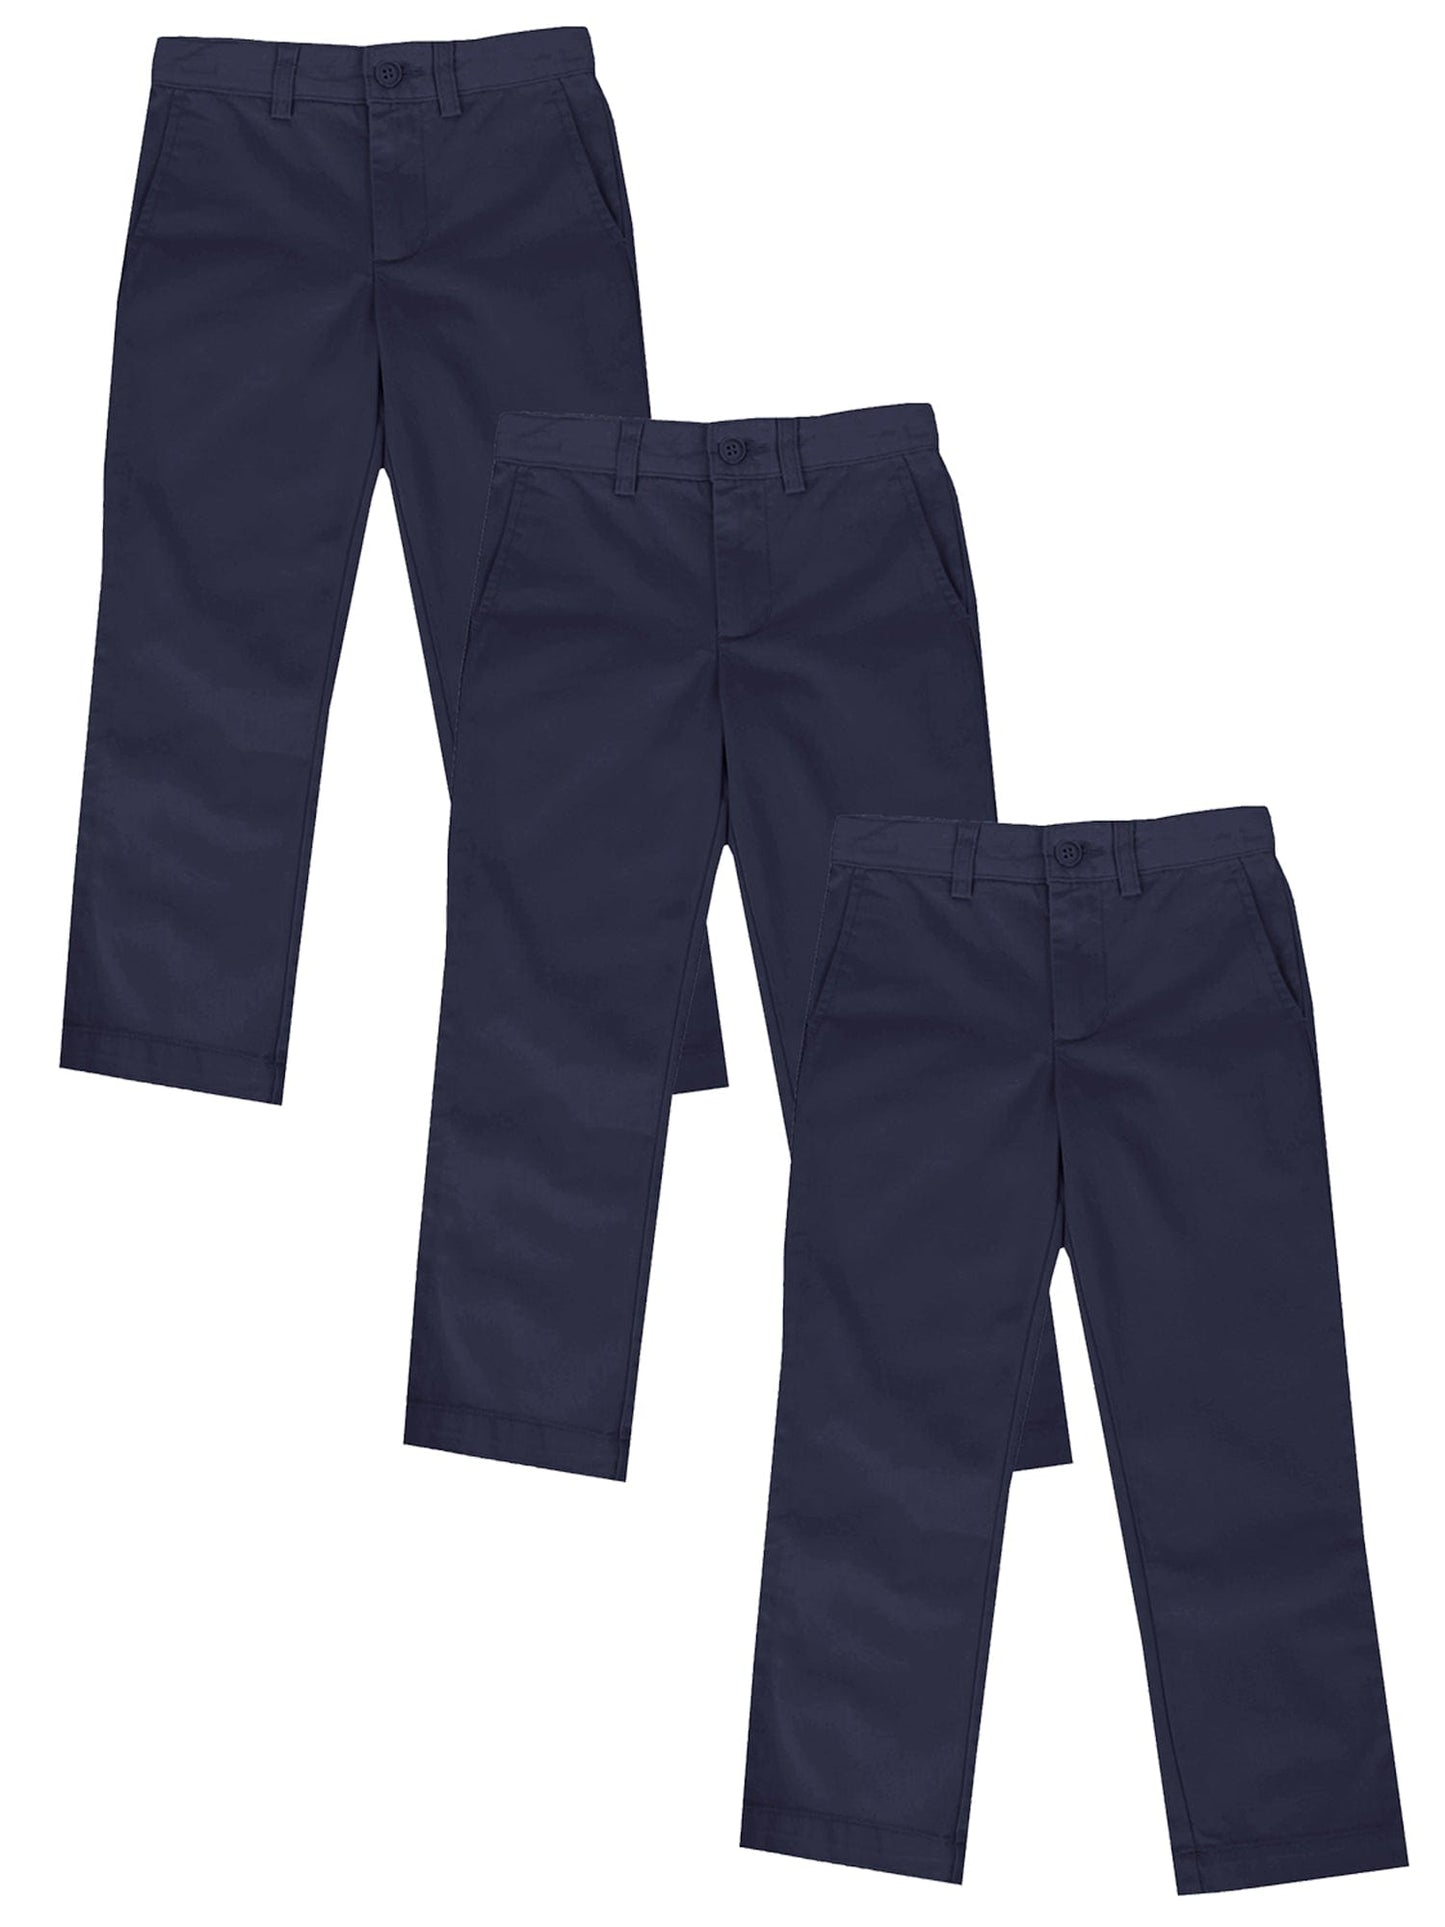 Boys (3-PACK) Super Stretch School Uniform Pants - GalaxybyHarvic